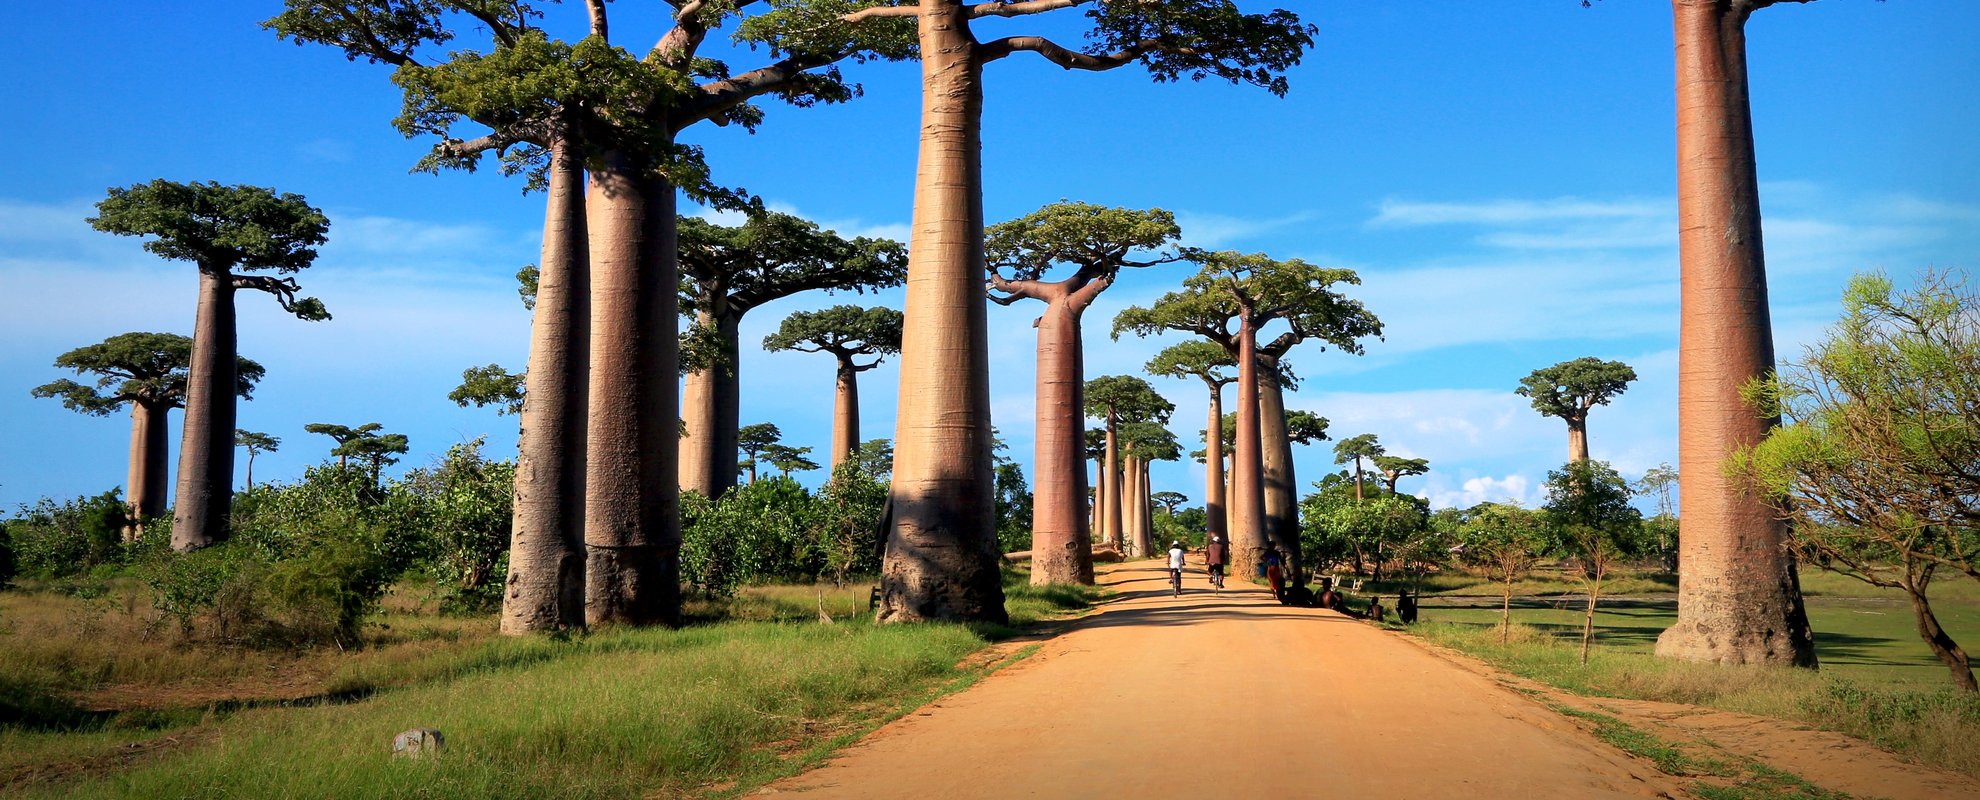 De mäktiga baobabträden